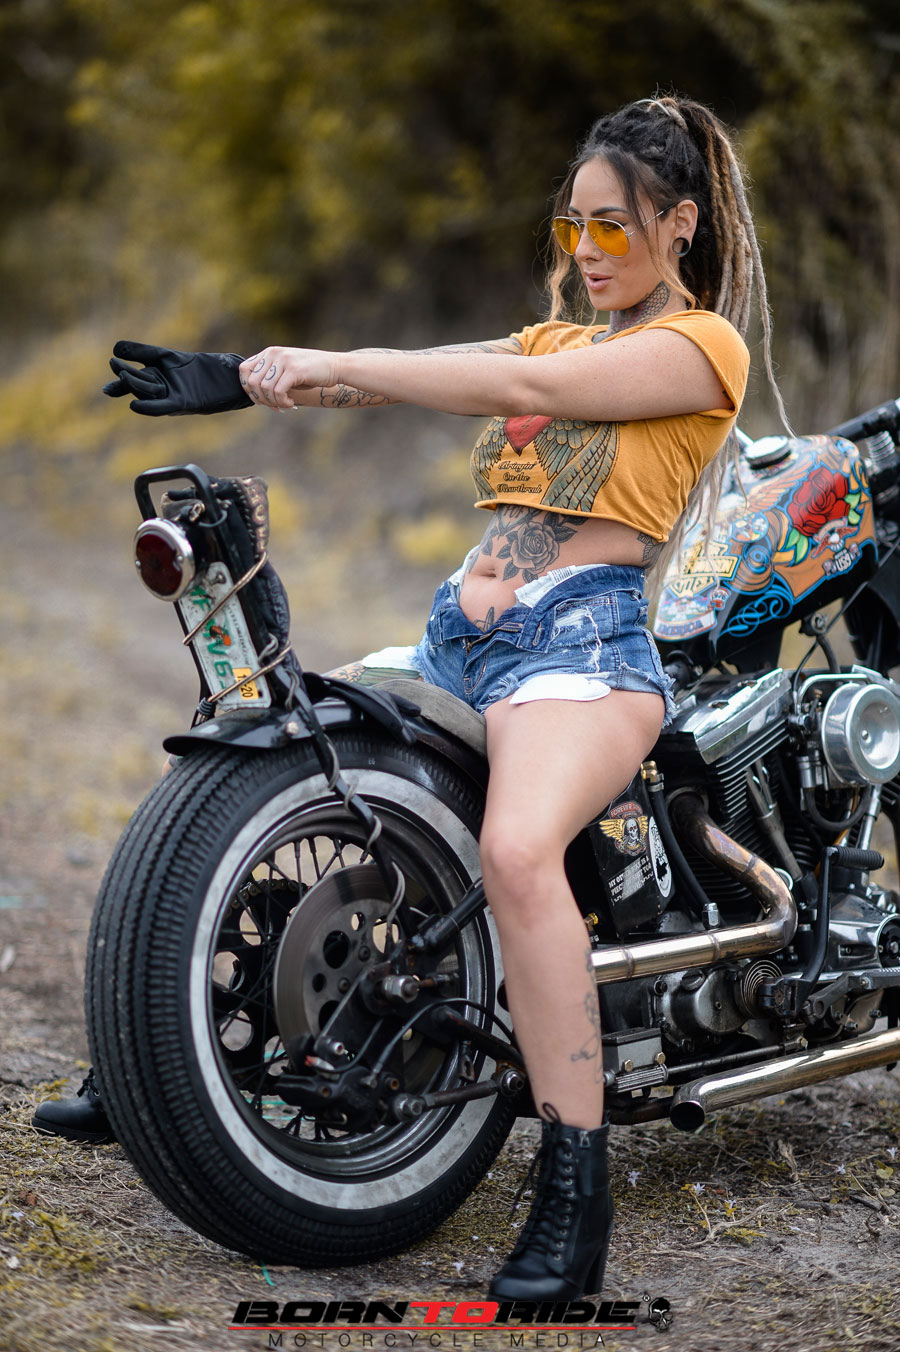 Biker Babe Velvet Queen 35 Born To Ride Motorcycle Magazine Motorcycle Tv Radio Events 